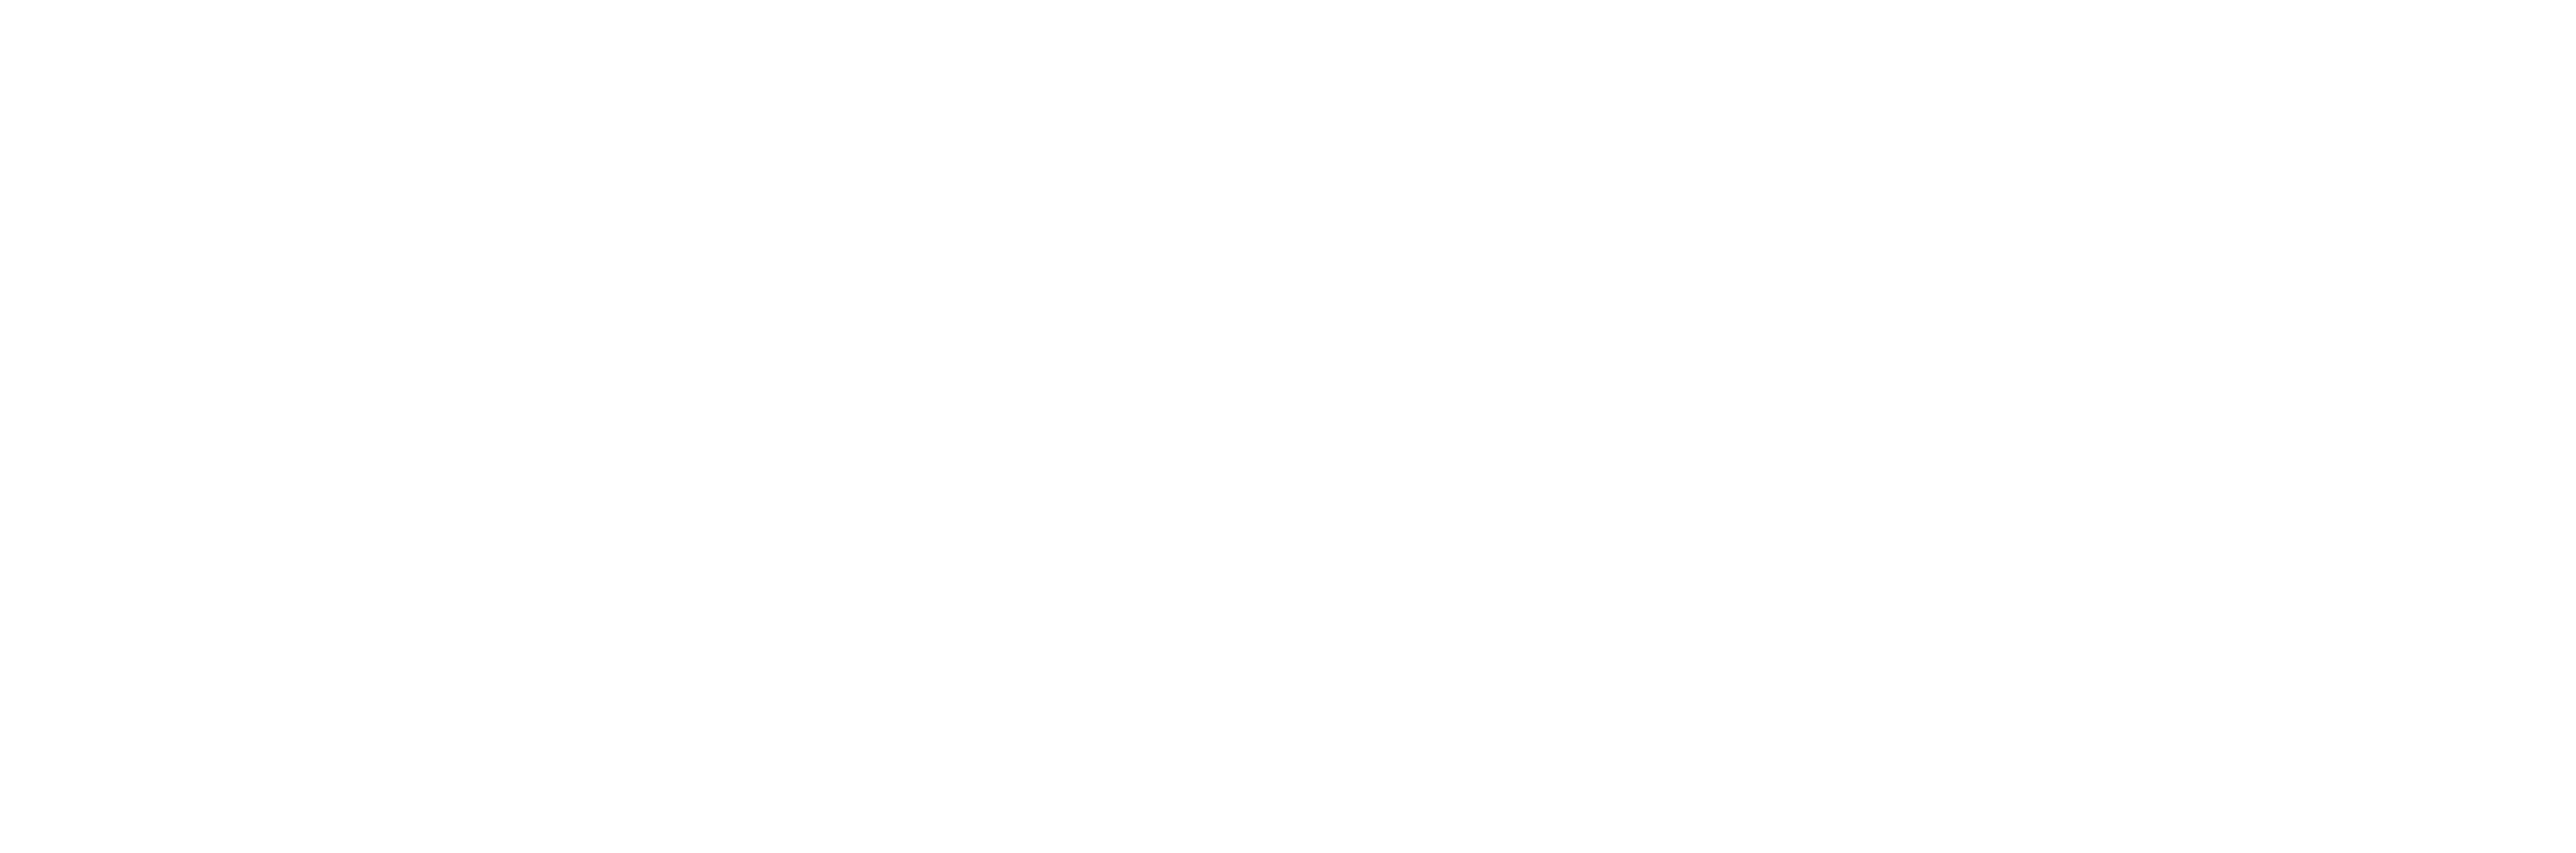 AniCura Velázquez Hospital Veterinario logo